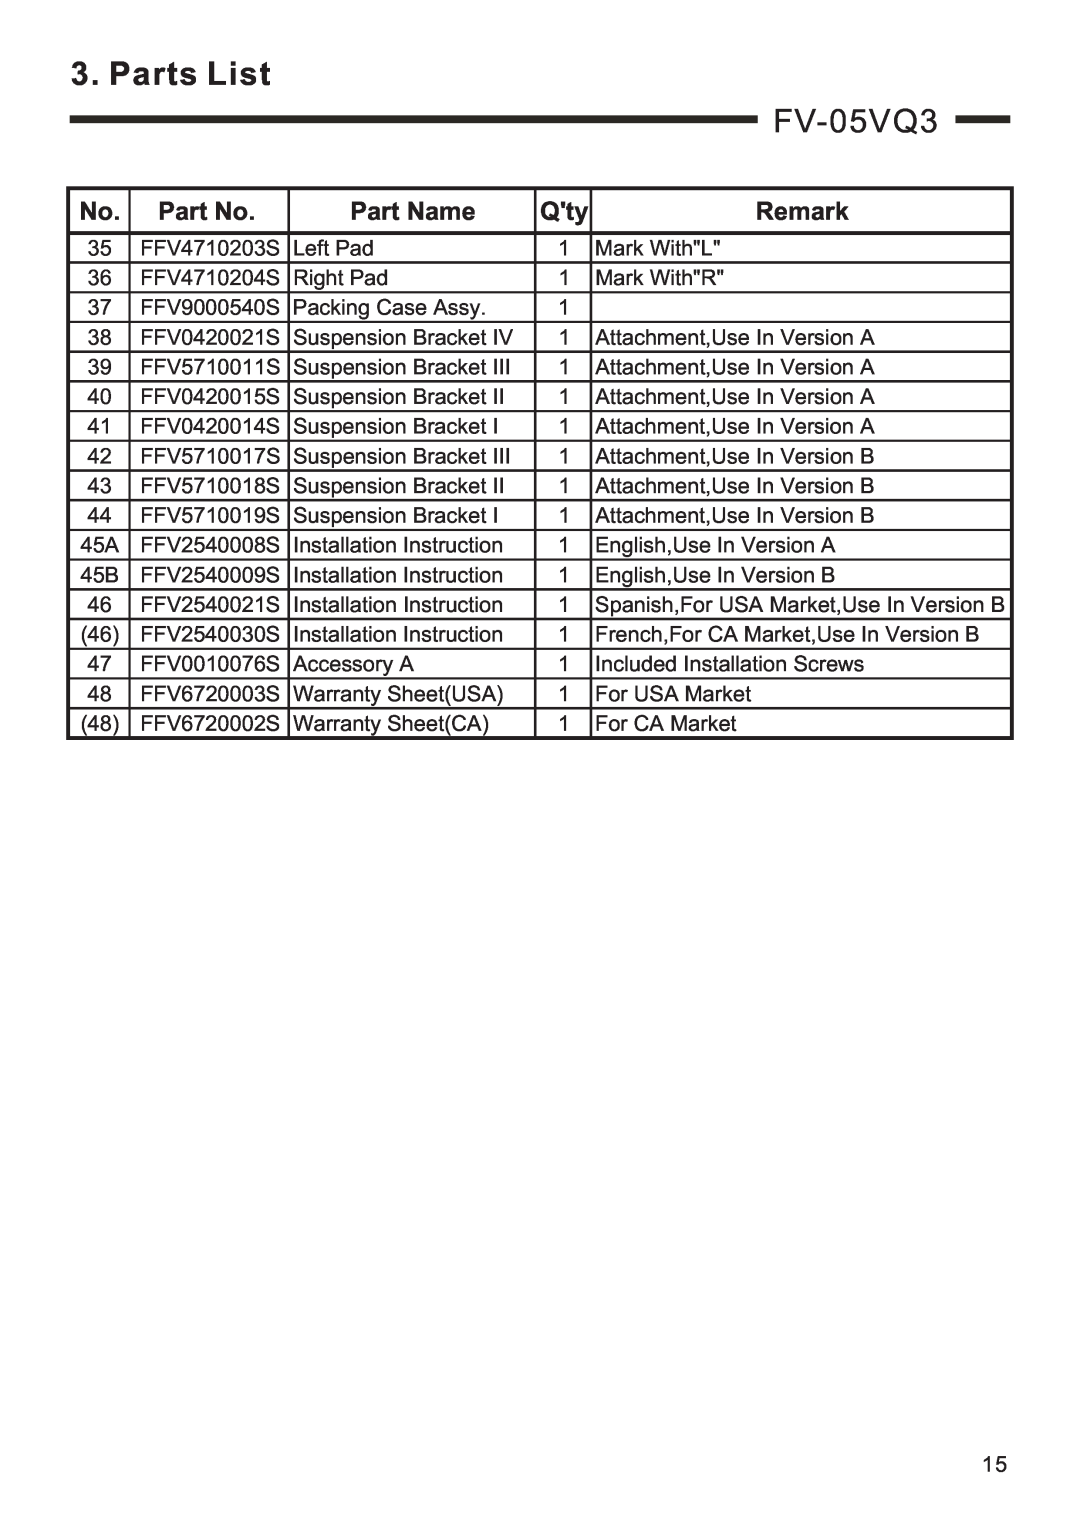 Panasonic FV-15VQ4, FV-11VQ3, FV-08VQ3 service manual Parts List, FV-05VQ3, Part Name, Remark 